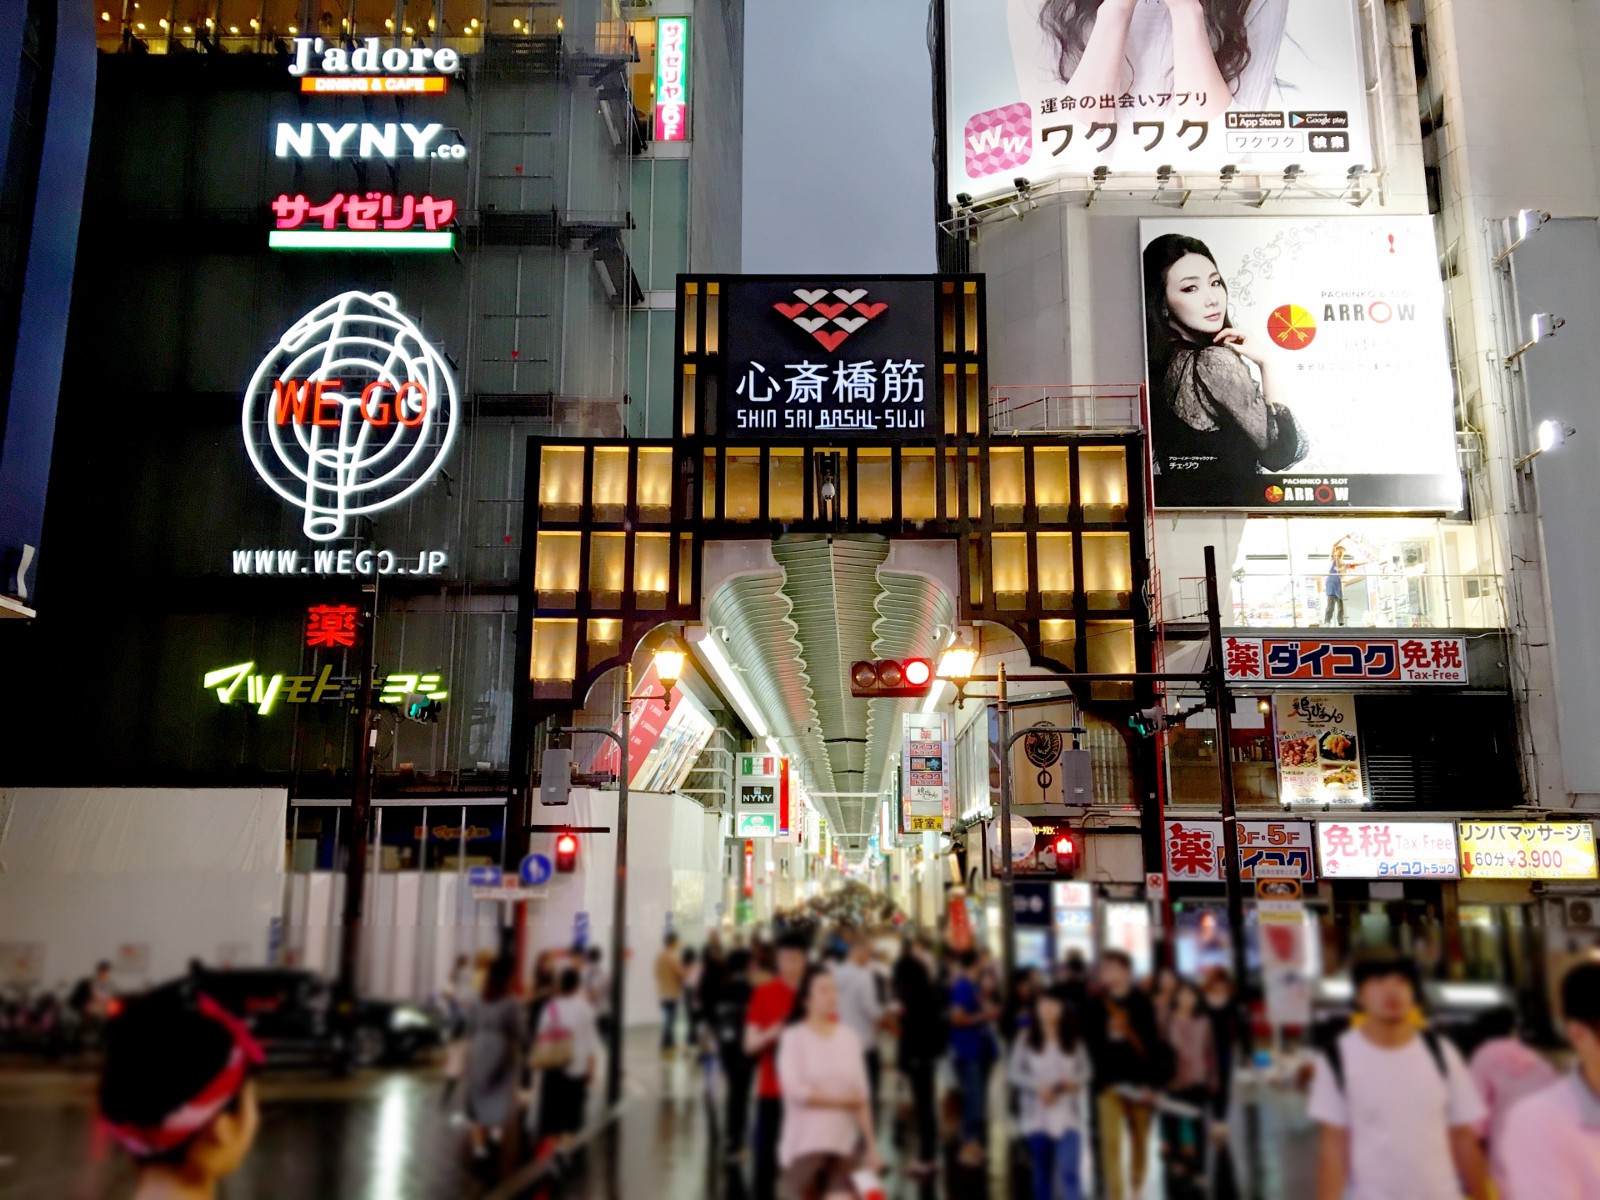 Shinsakbashi Shopping Street